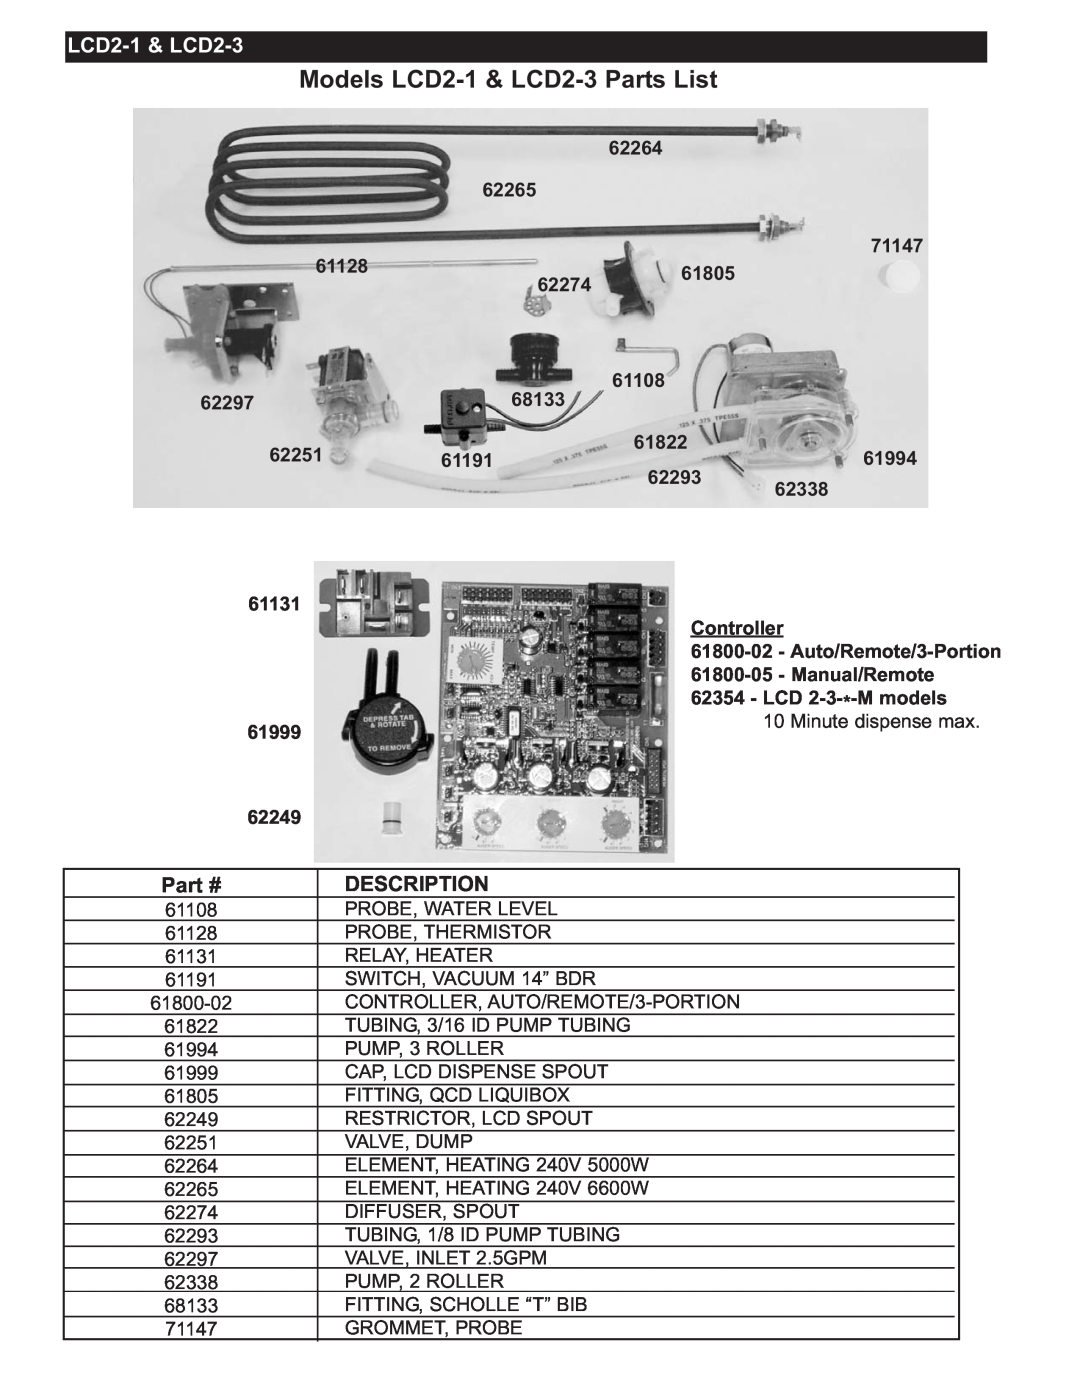 Grindmaster configurationmanual Models LCD2-1 & LCD2-3 Parts List, Description 